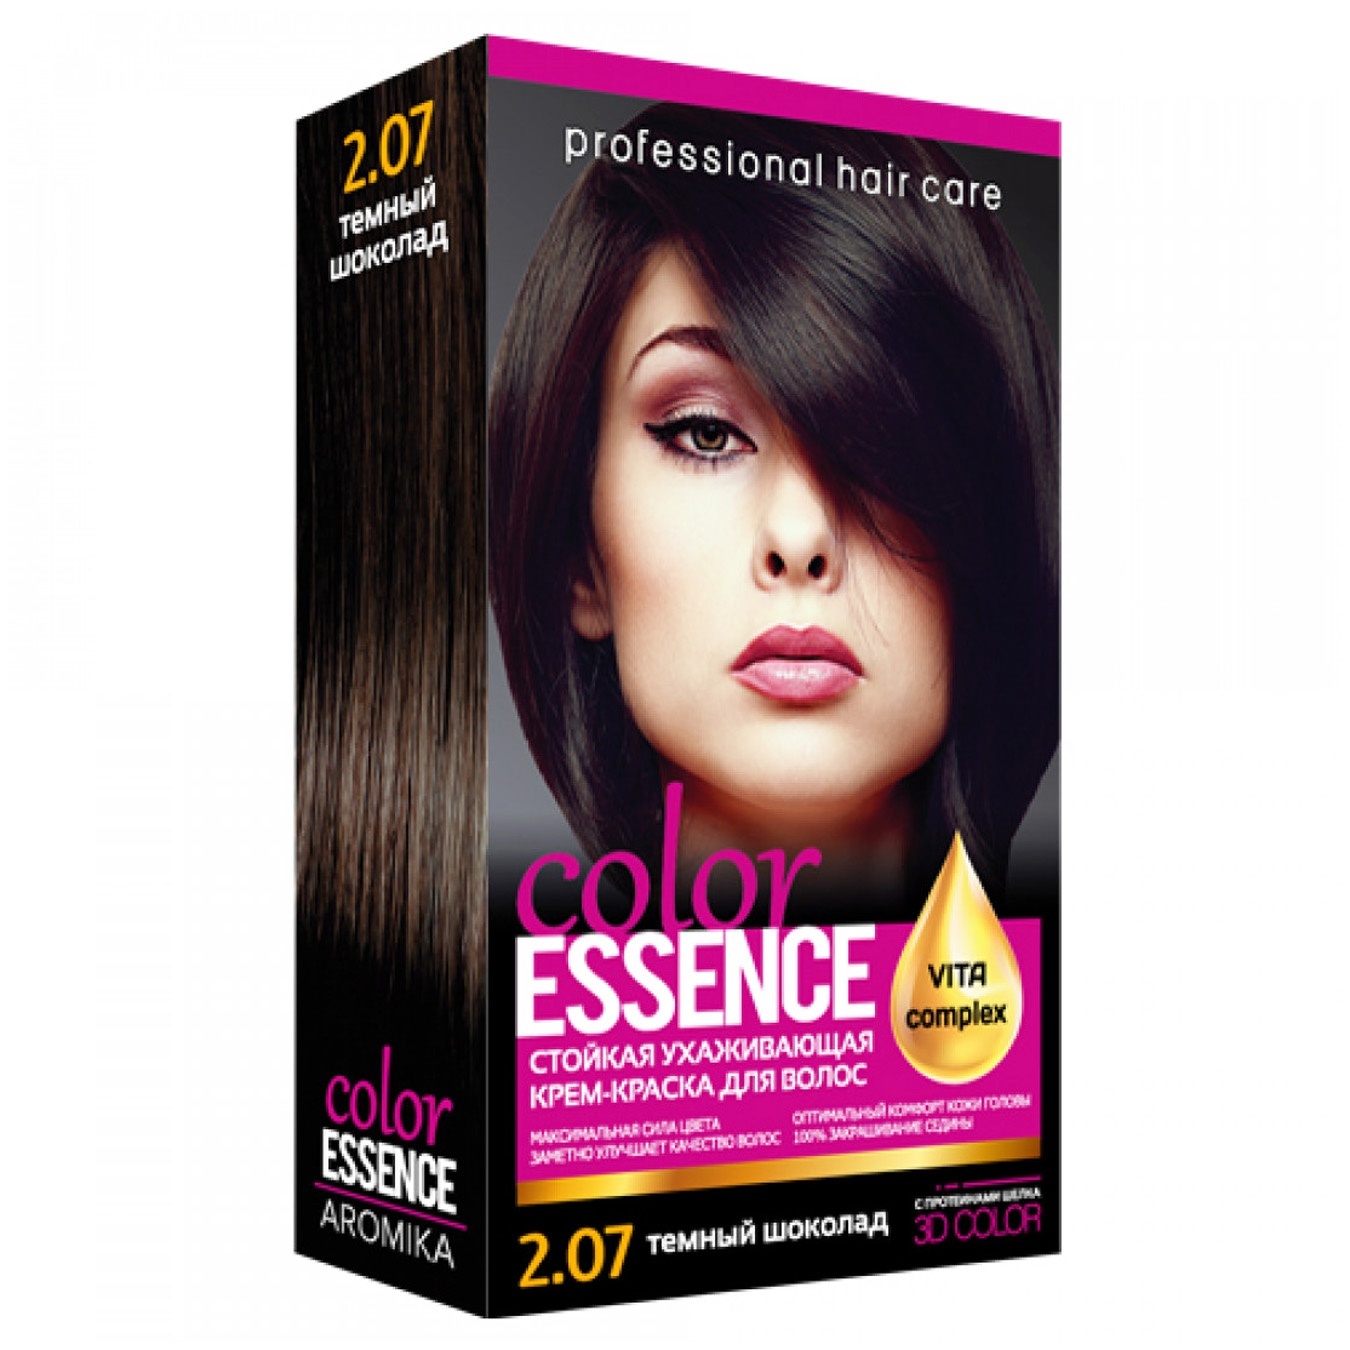 Coloressence- best hair color brands